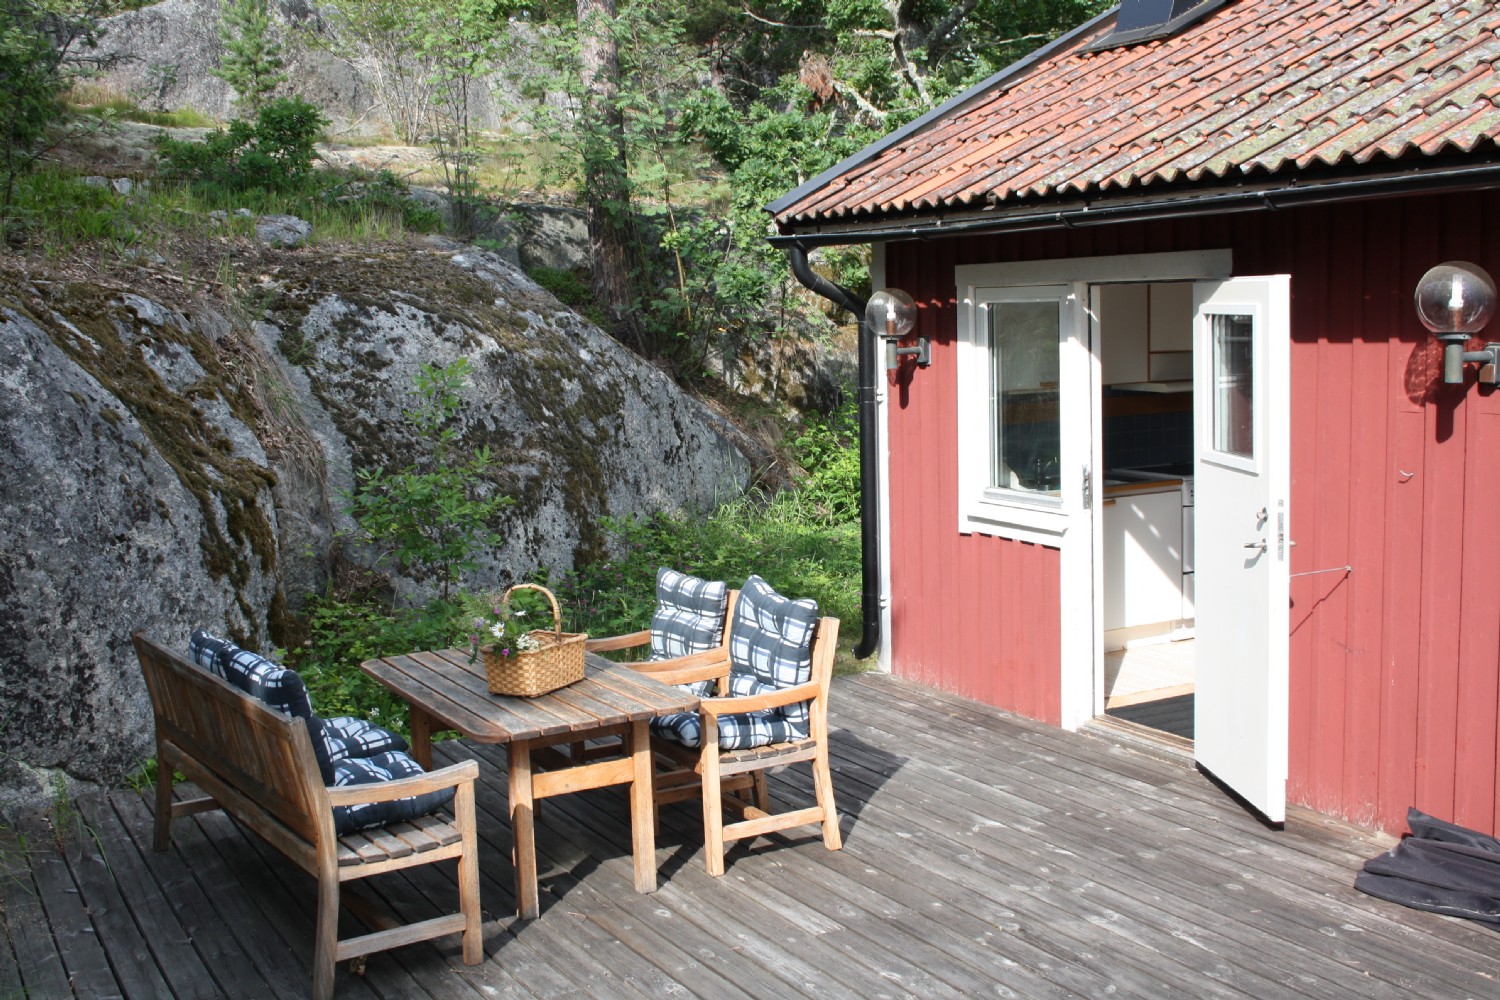 Altan vid kksingngen e.m-sol/ Terrace and kitchen entrance afternoon sun 